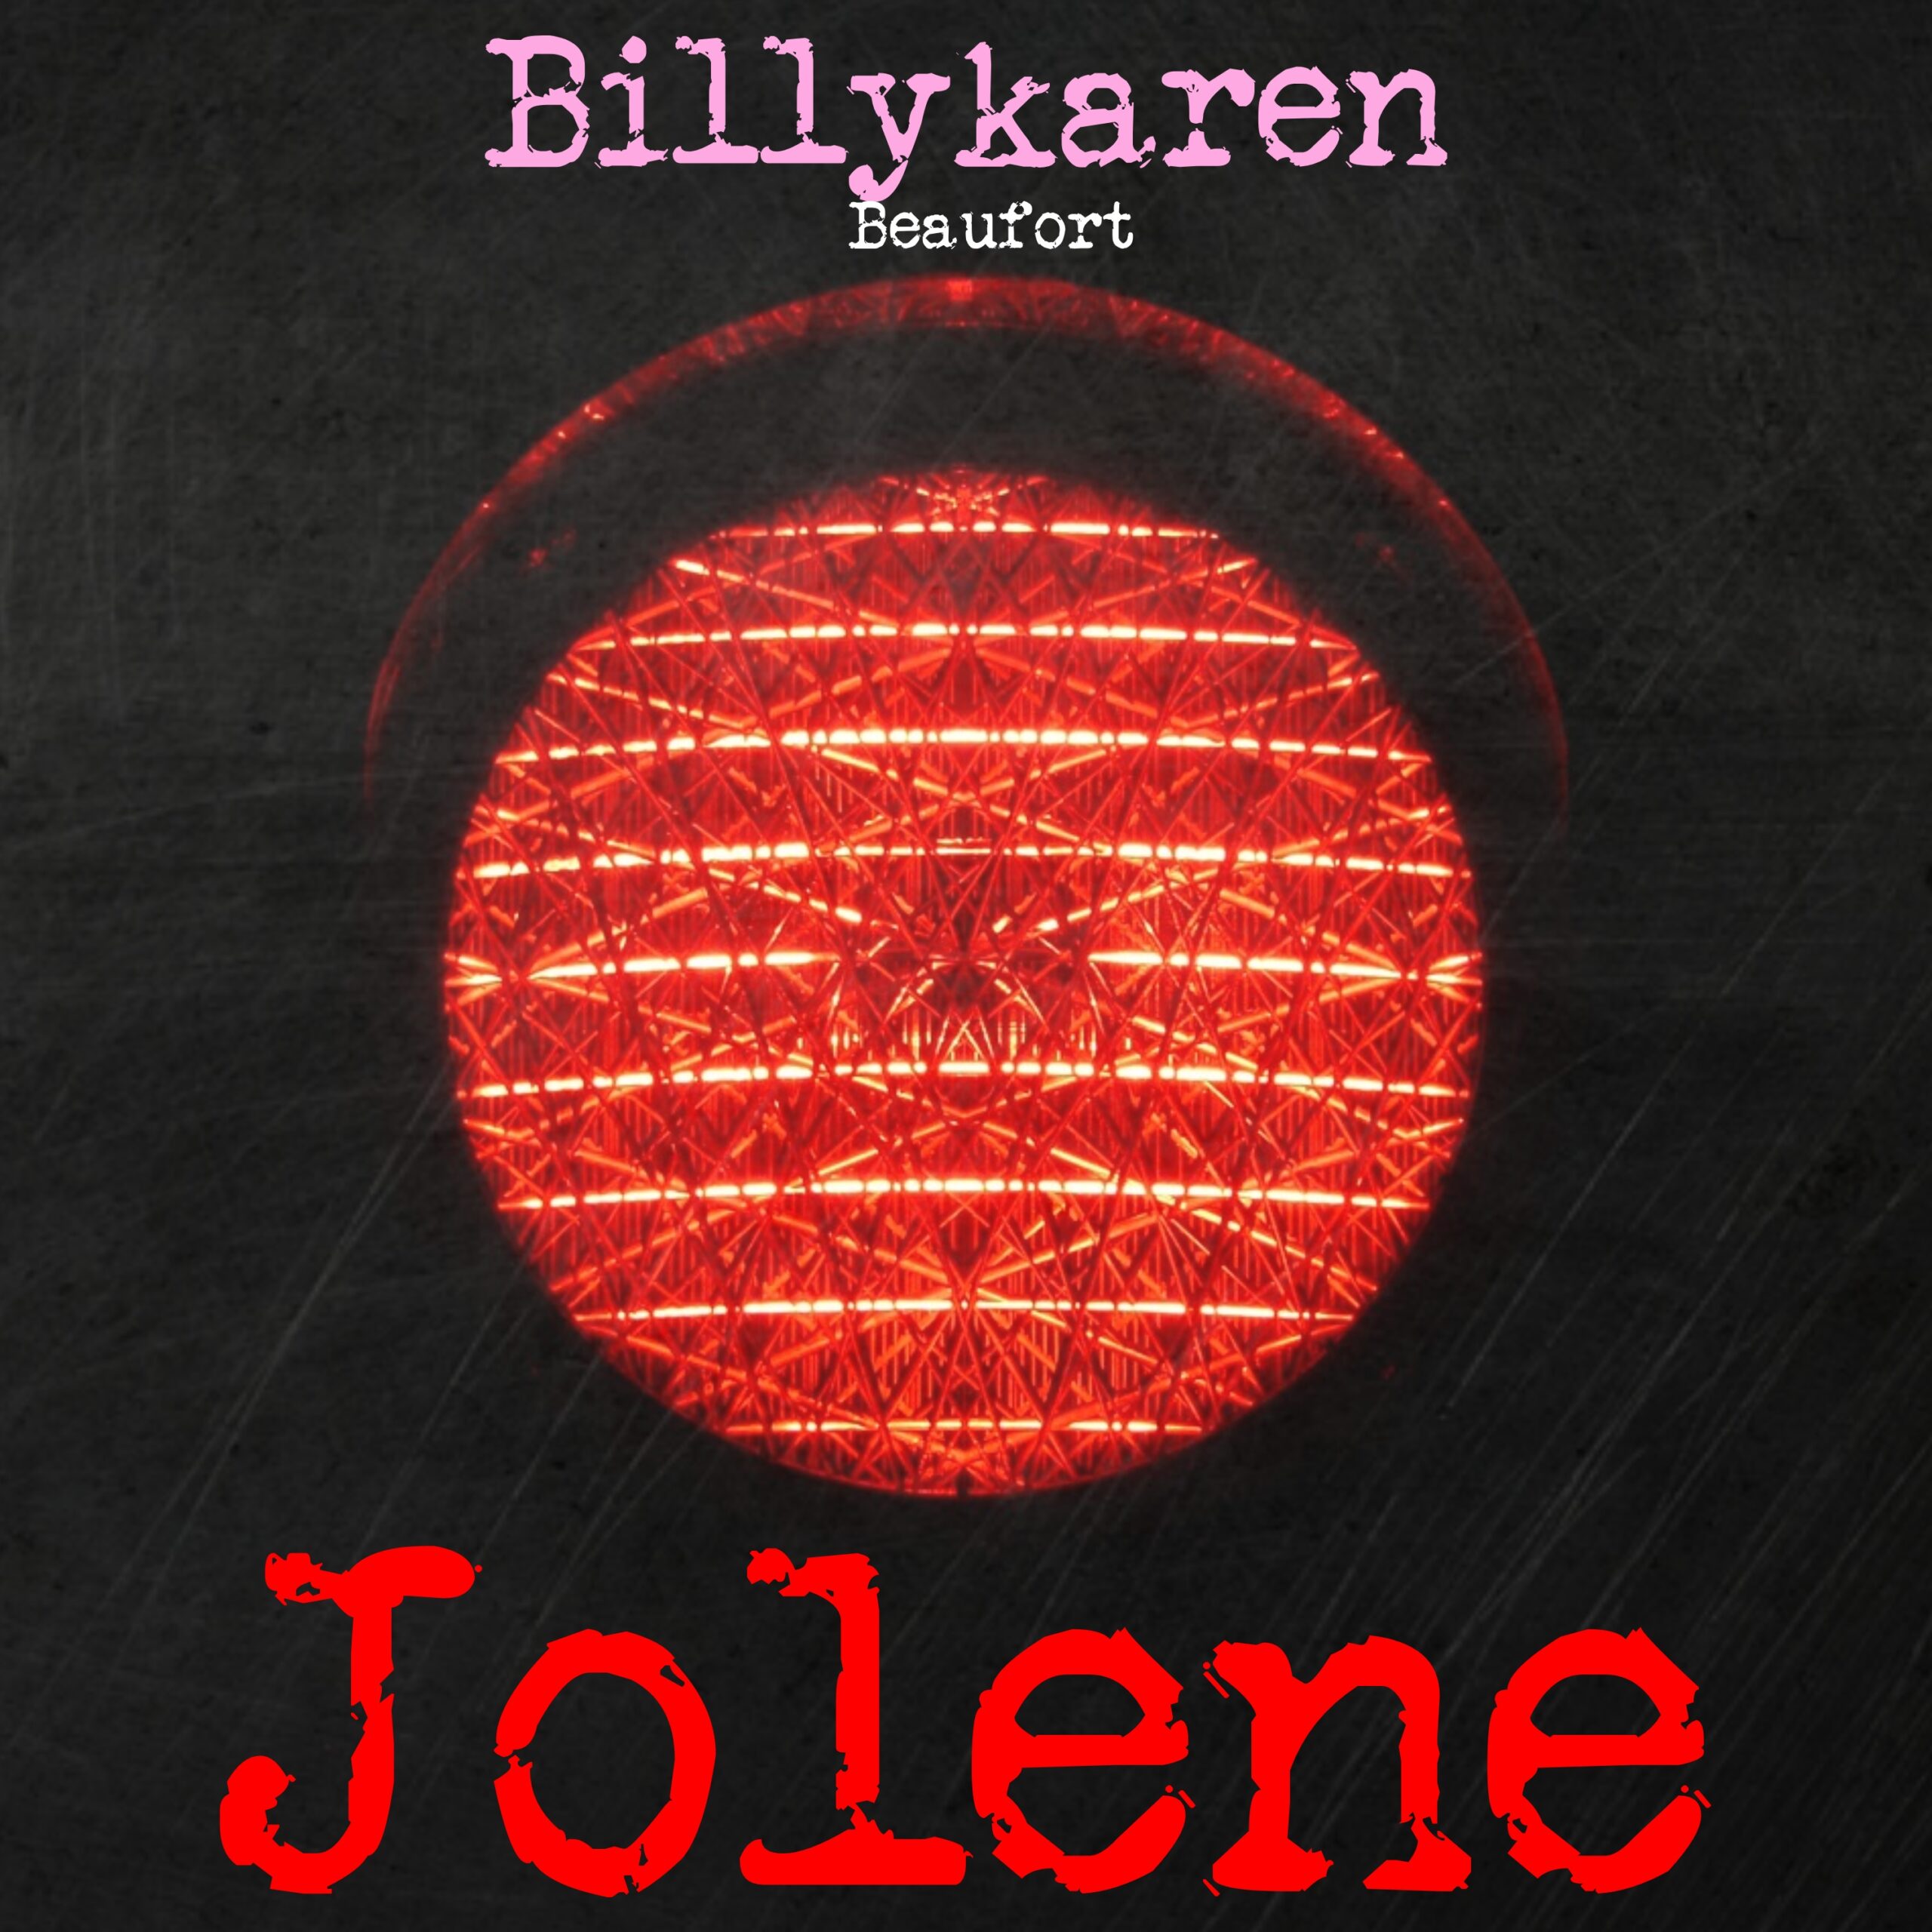 Jolene (Guy Version) Album Art. Billykaren in pink over Beufort in white. Middle of screen is a red stoplight, and the word Jolene below it in red.